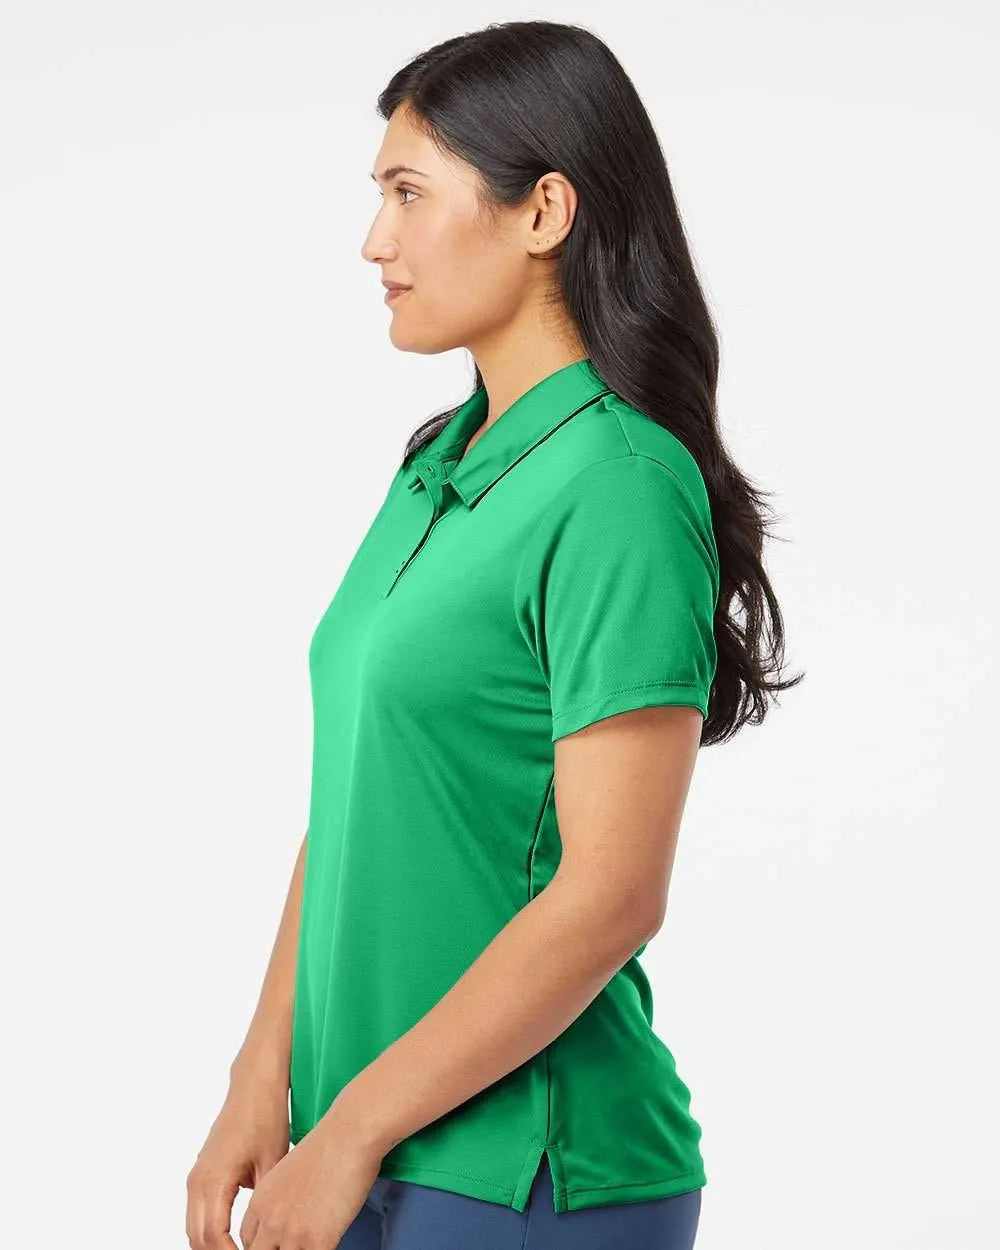 Women's Performance Polo - A231 - Print Me Shirts